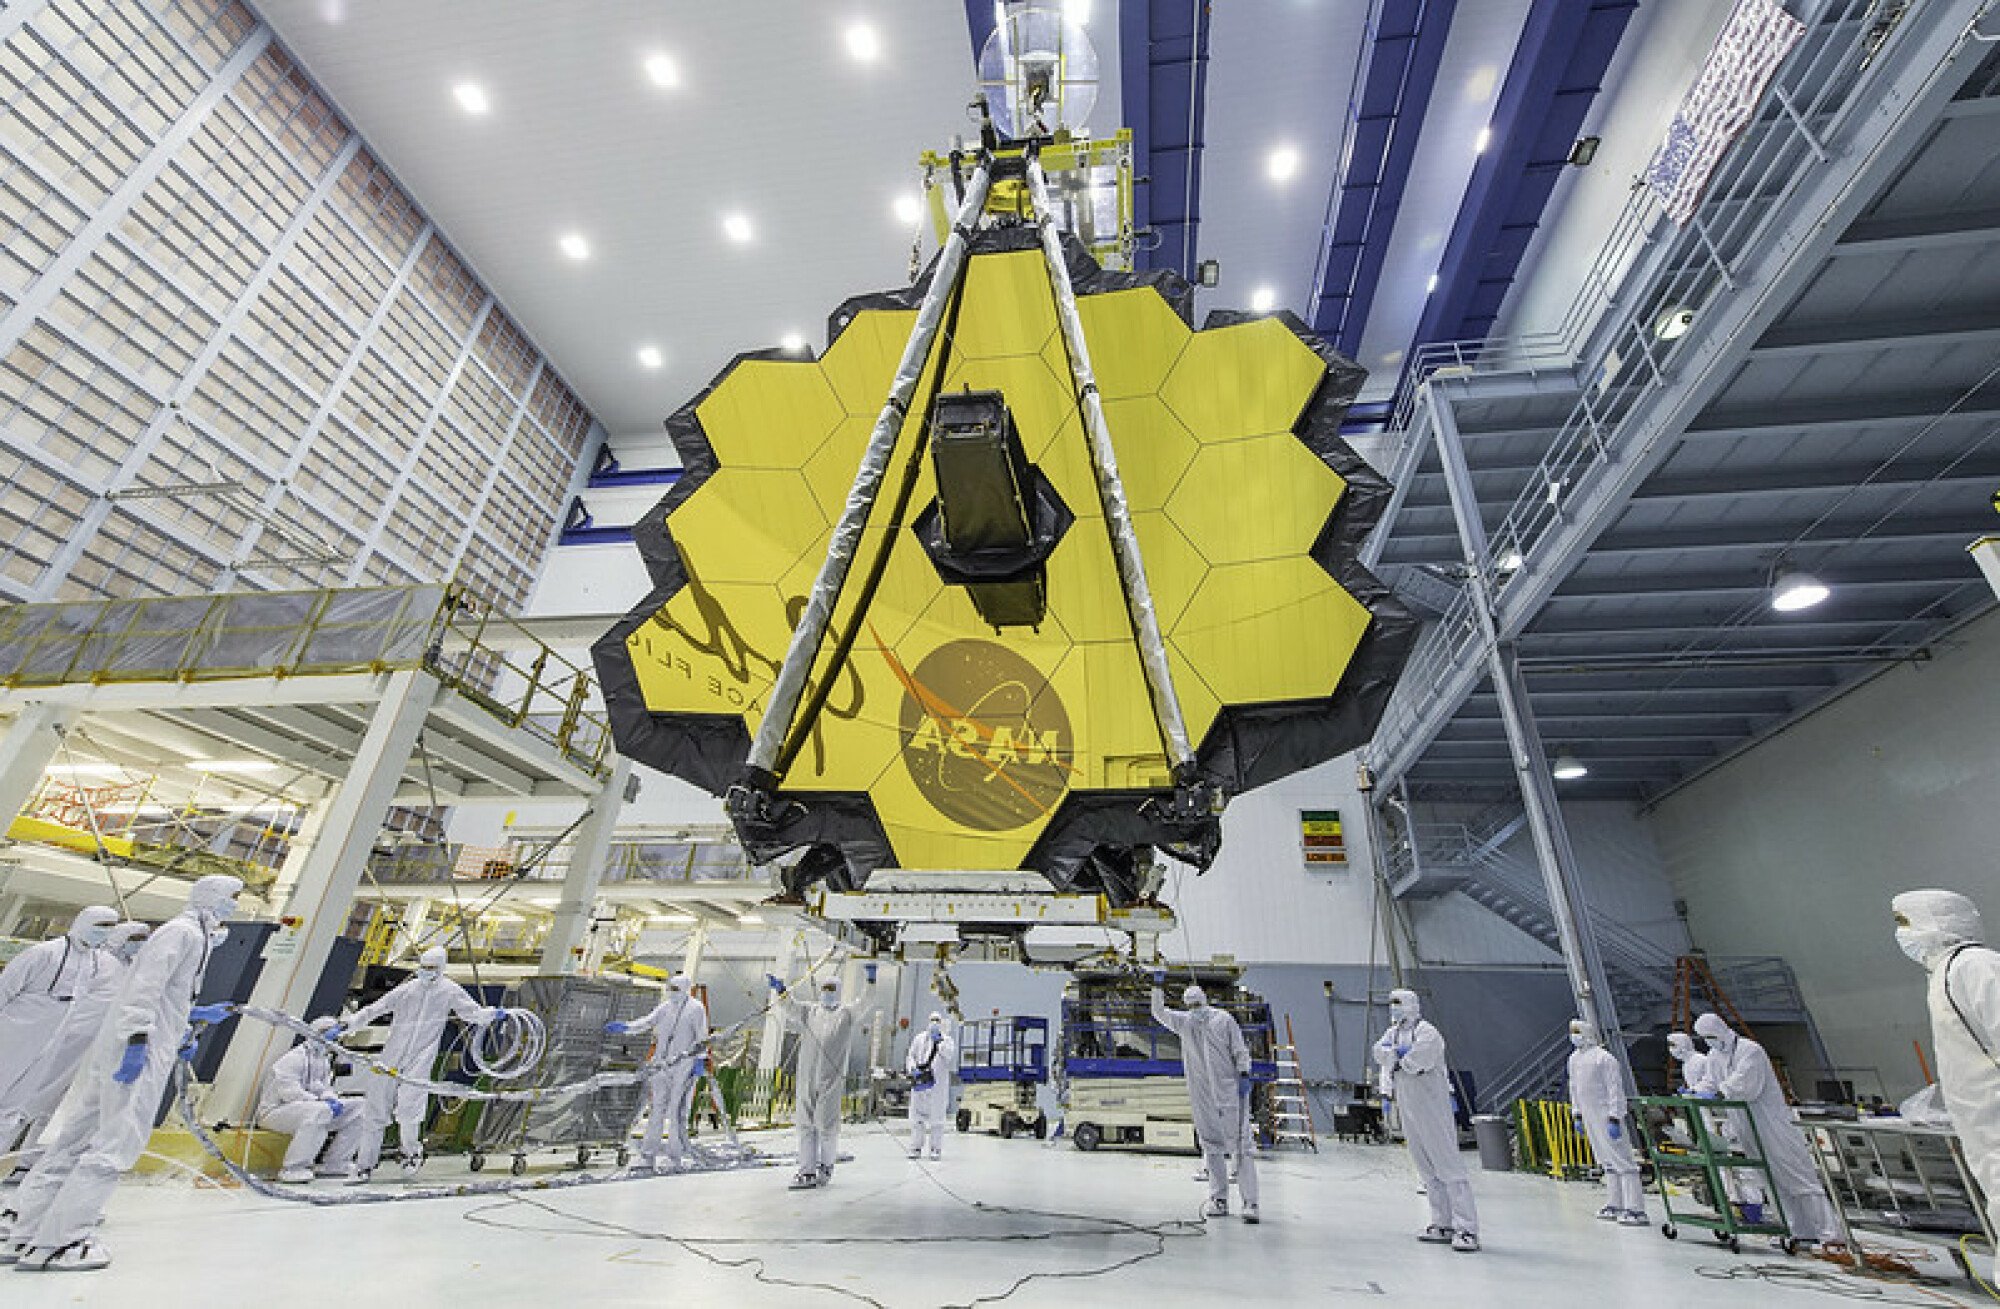 Engineers working on the James Webb Space Telescope